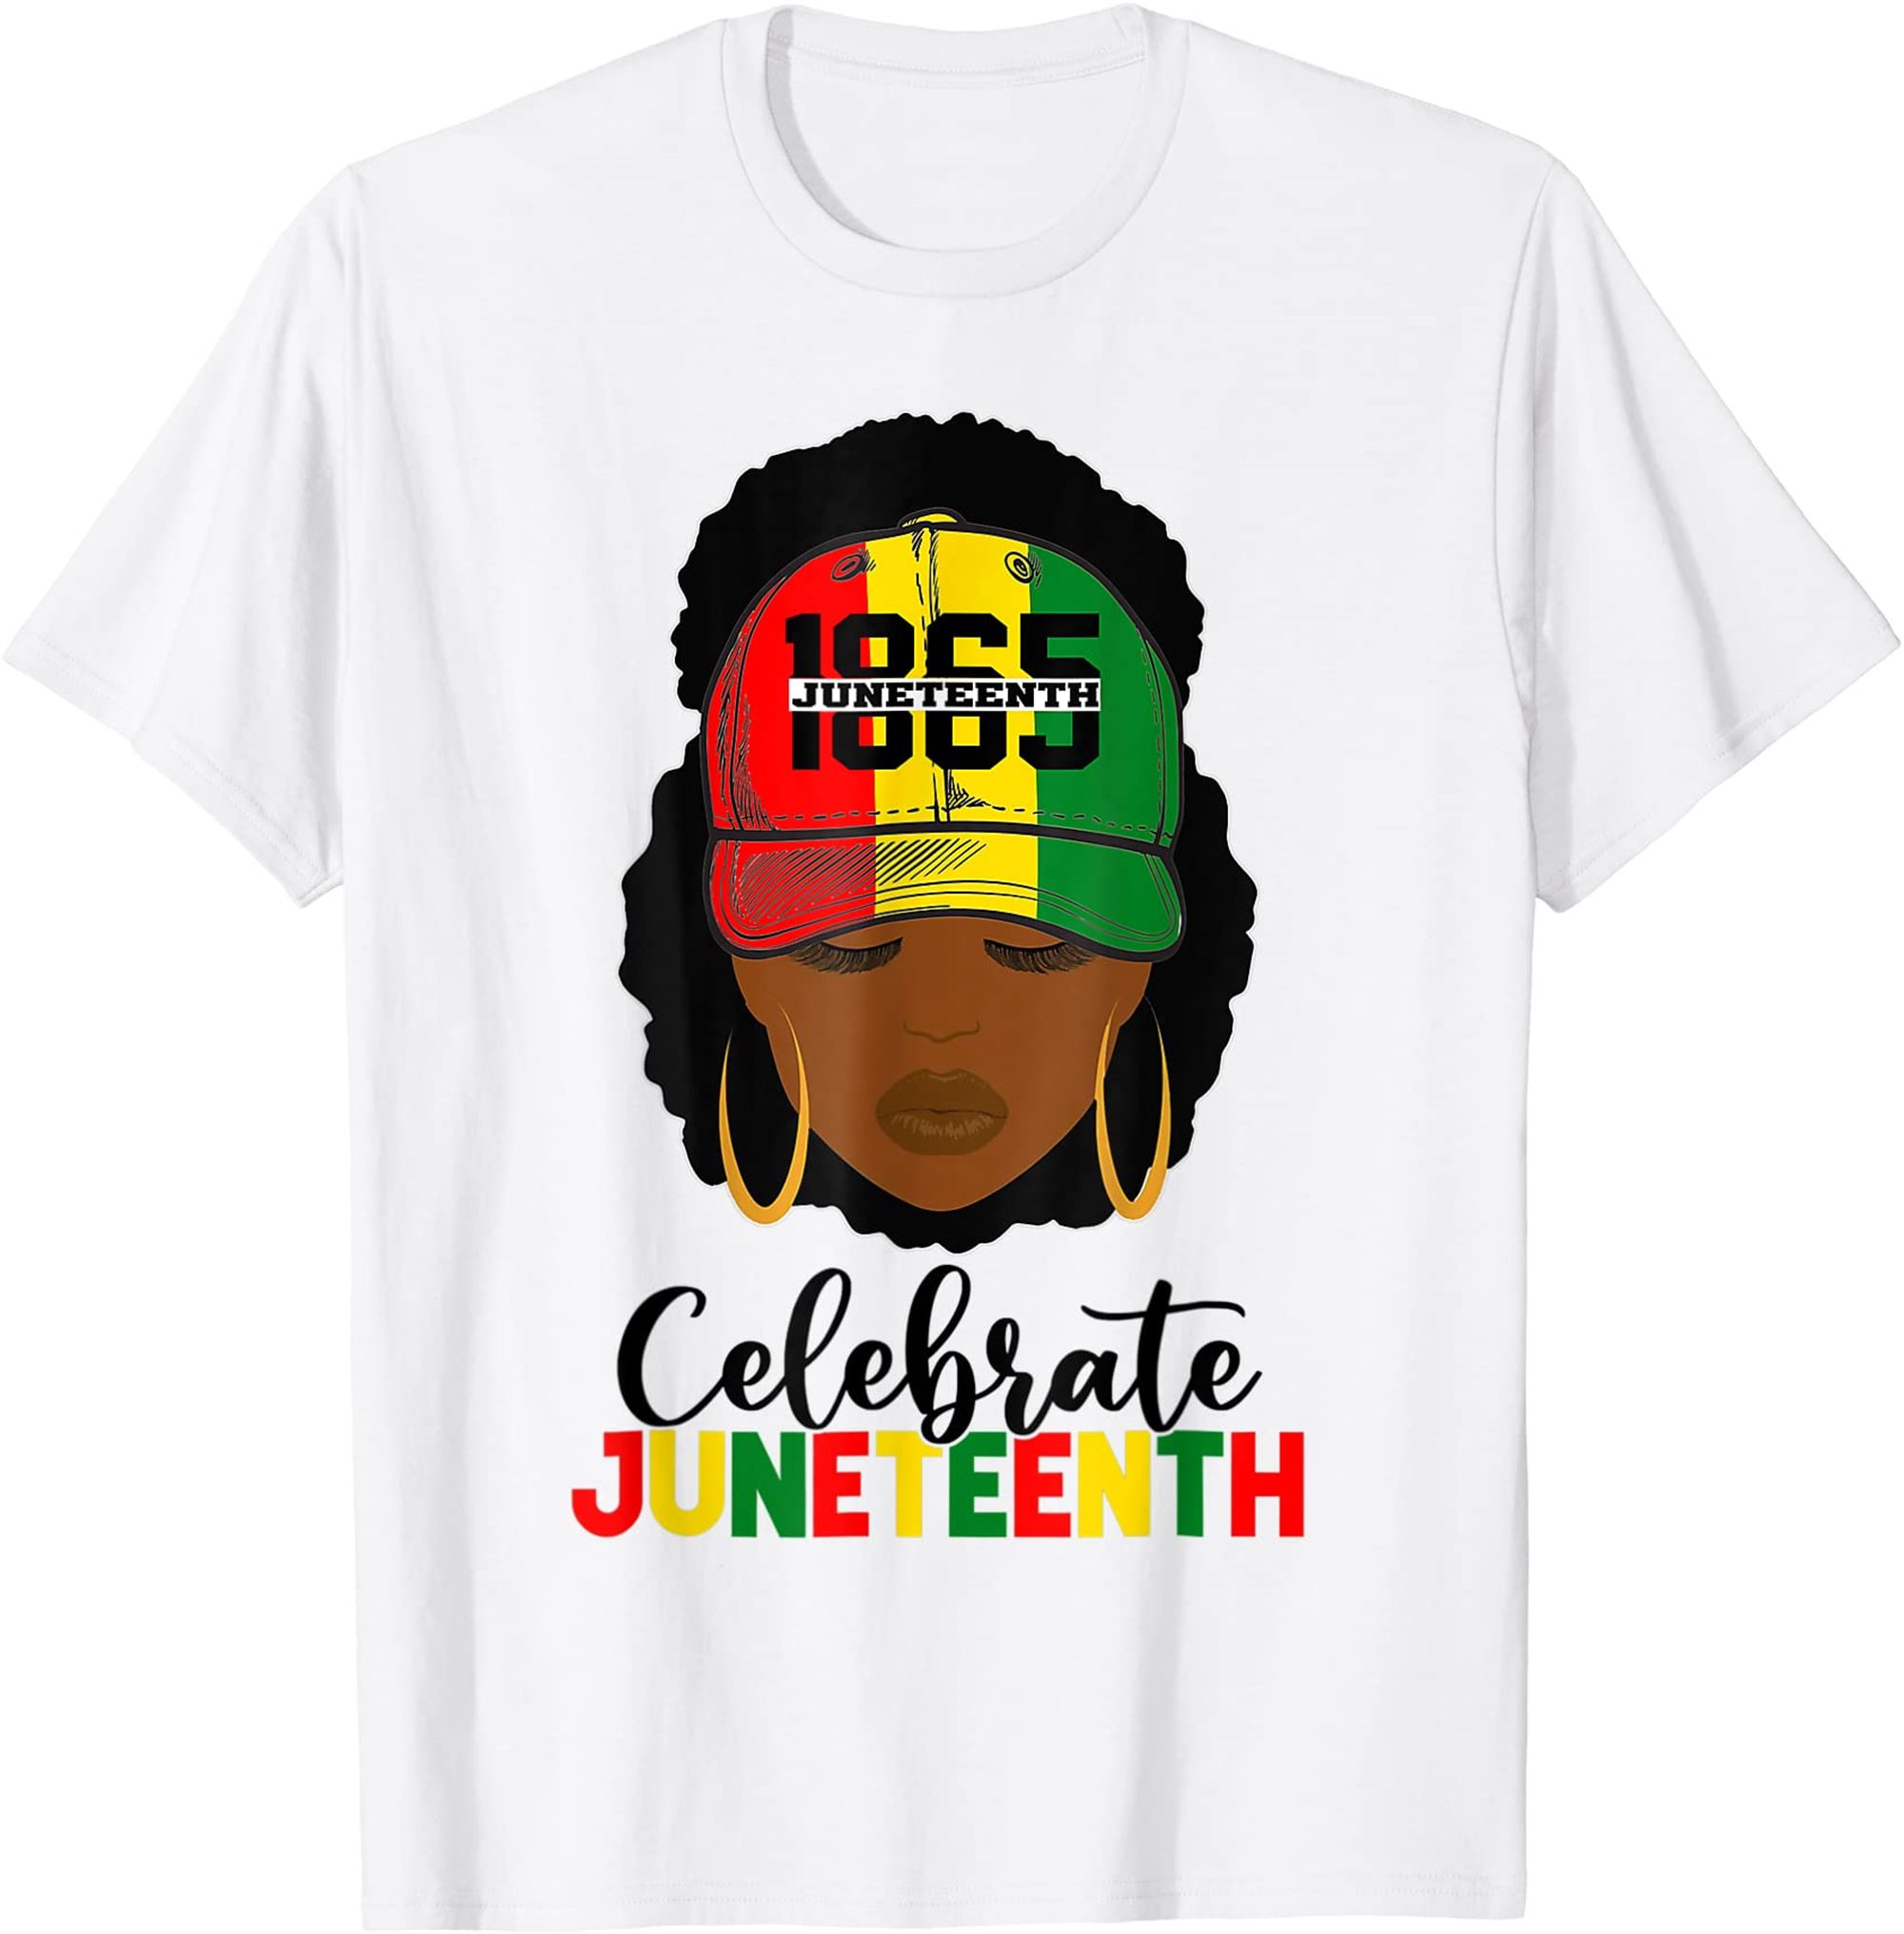 Juneteenth Celebrate 1865 June 19th Black Women Black Pride T-shirt Full Size Up To 5xl